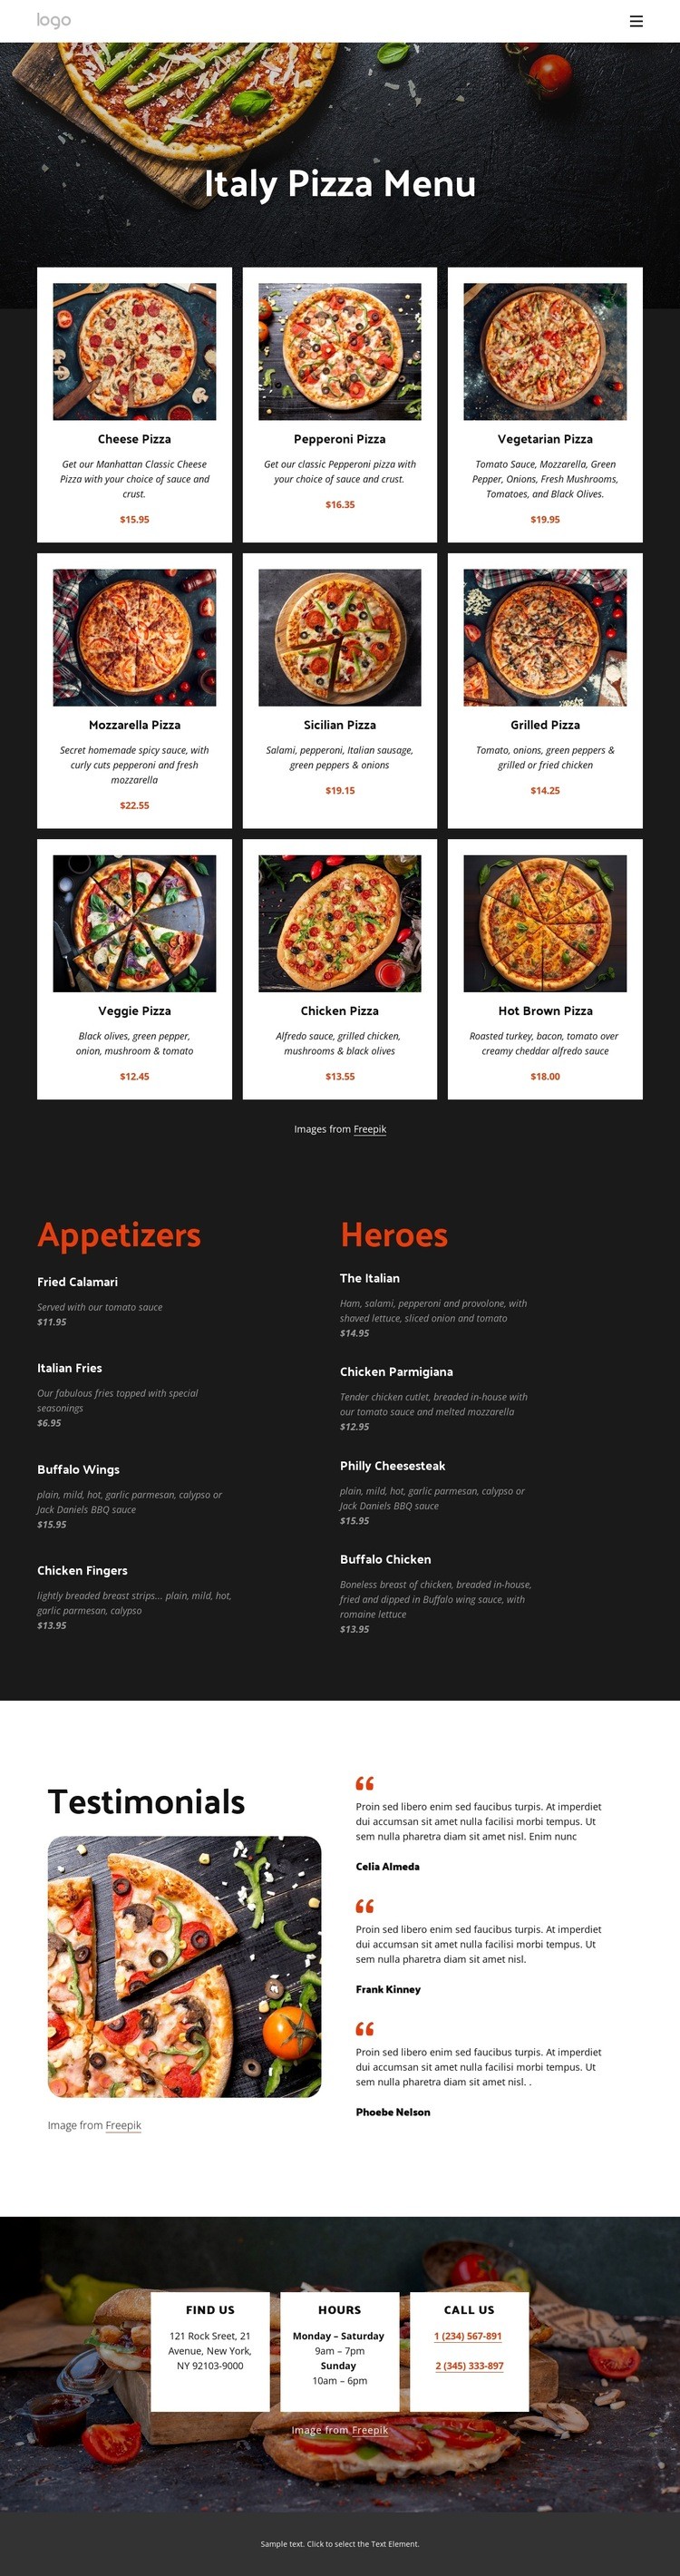 Our pizza menu Homepage Design